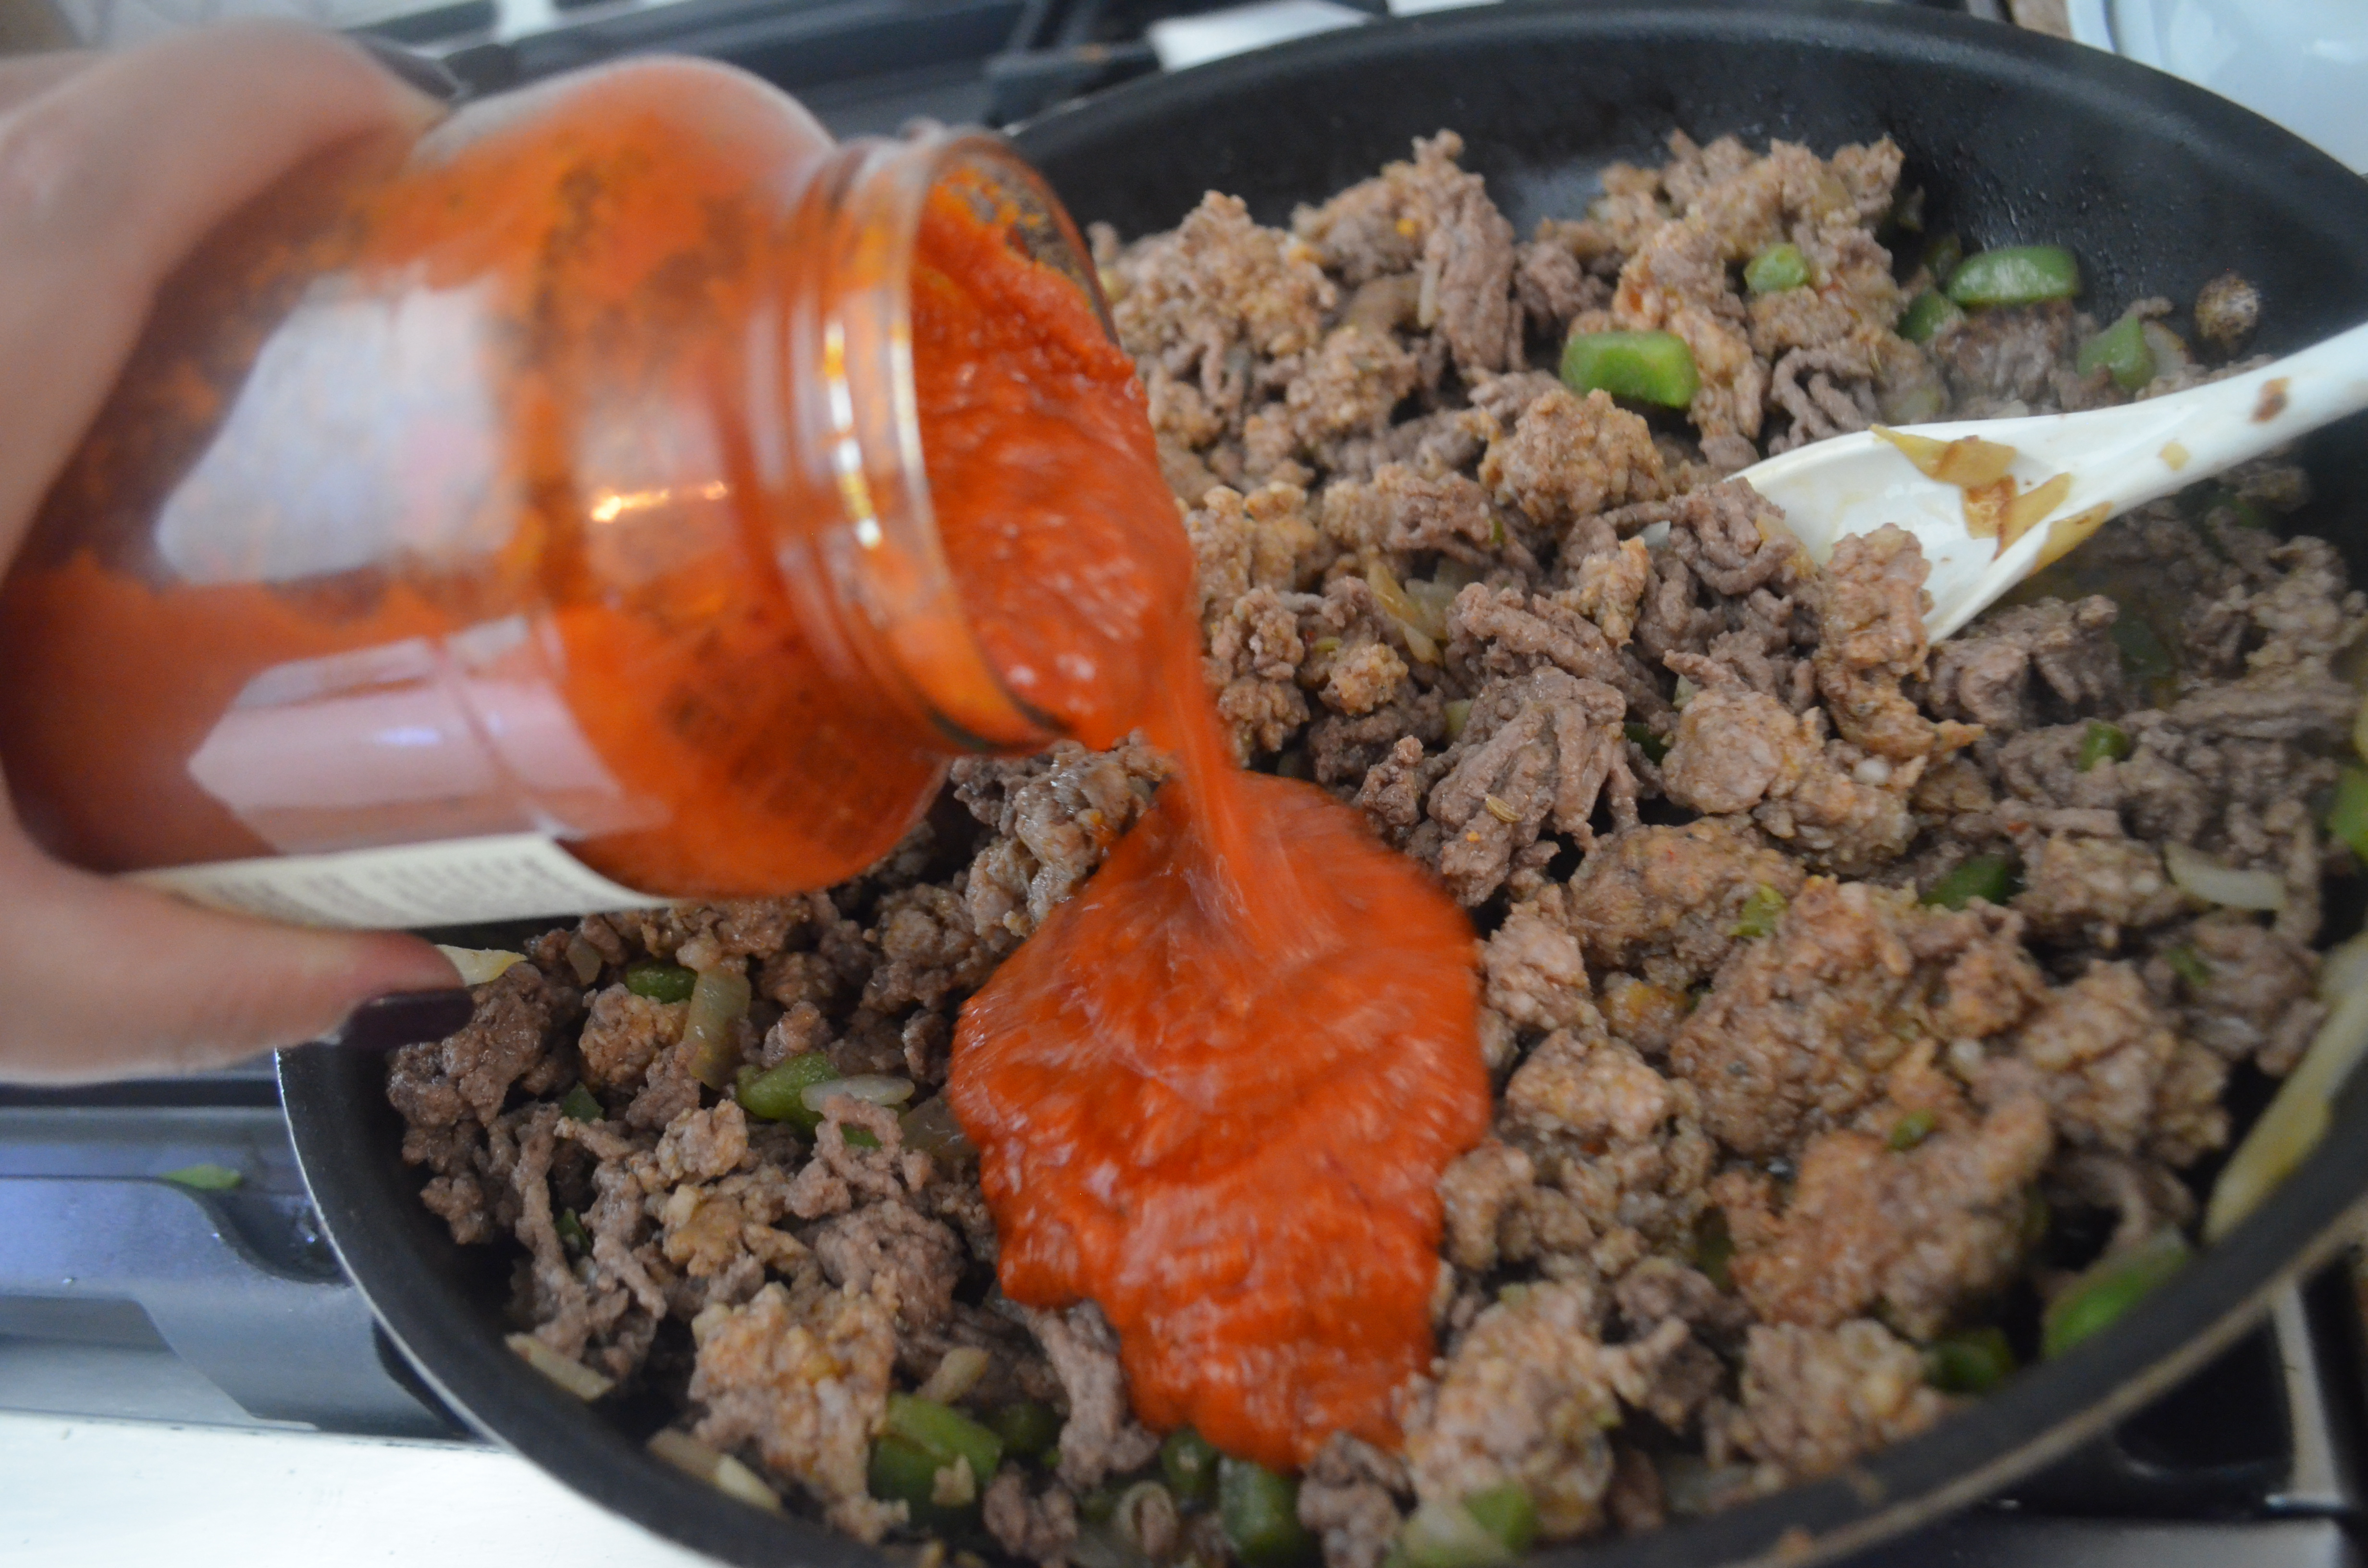 raos low carb homemade marinara sauce - pouring sauce into ground beef